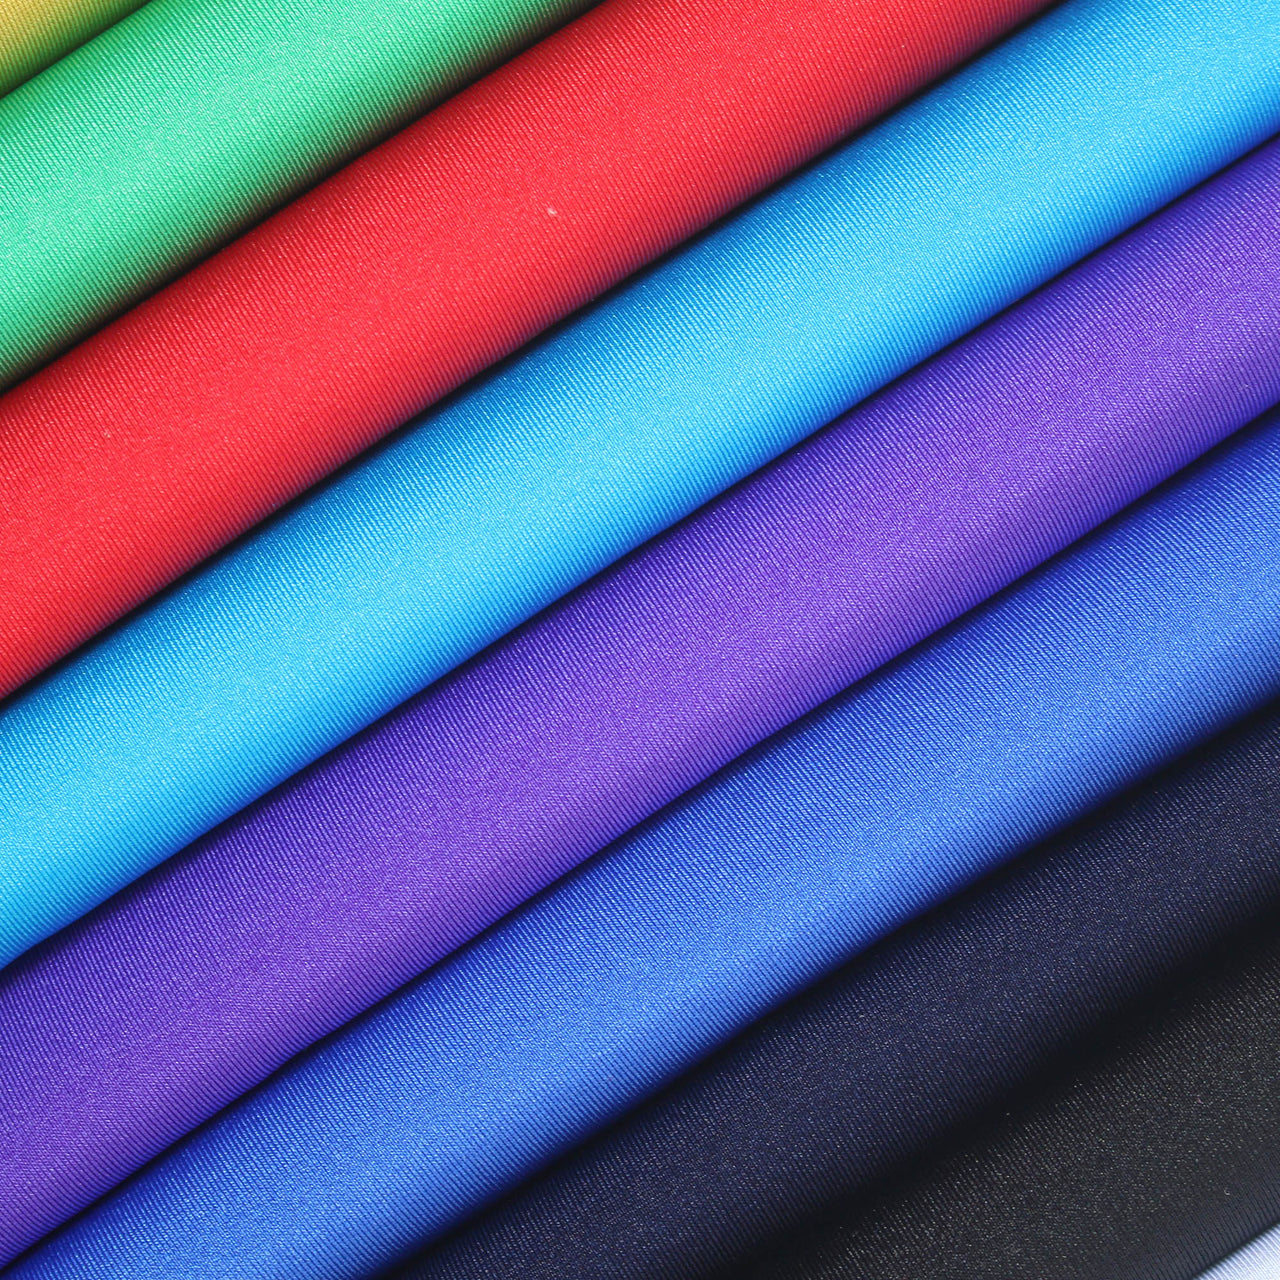 Nylon Spandex Fabric - 4 Way All Way Stretch Superior Quality - Leotards, Dancewear